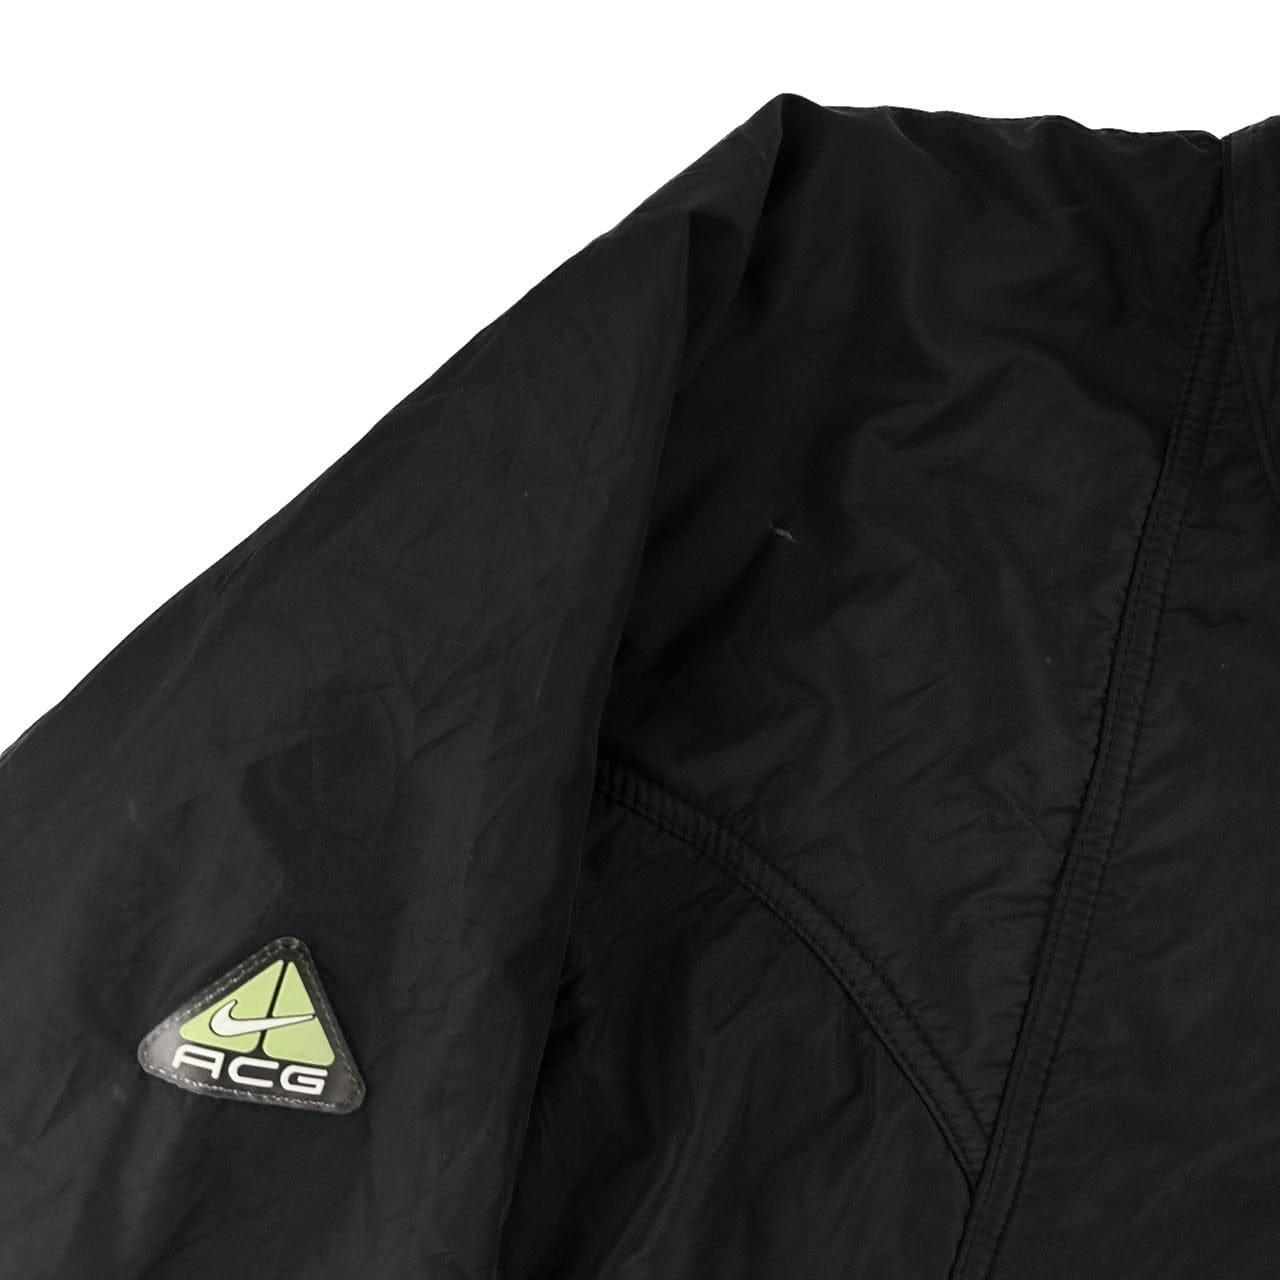 Vintage Nike ACG jacket size L - Known Source